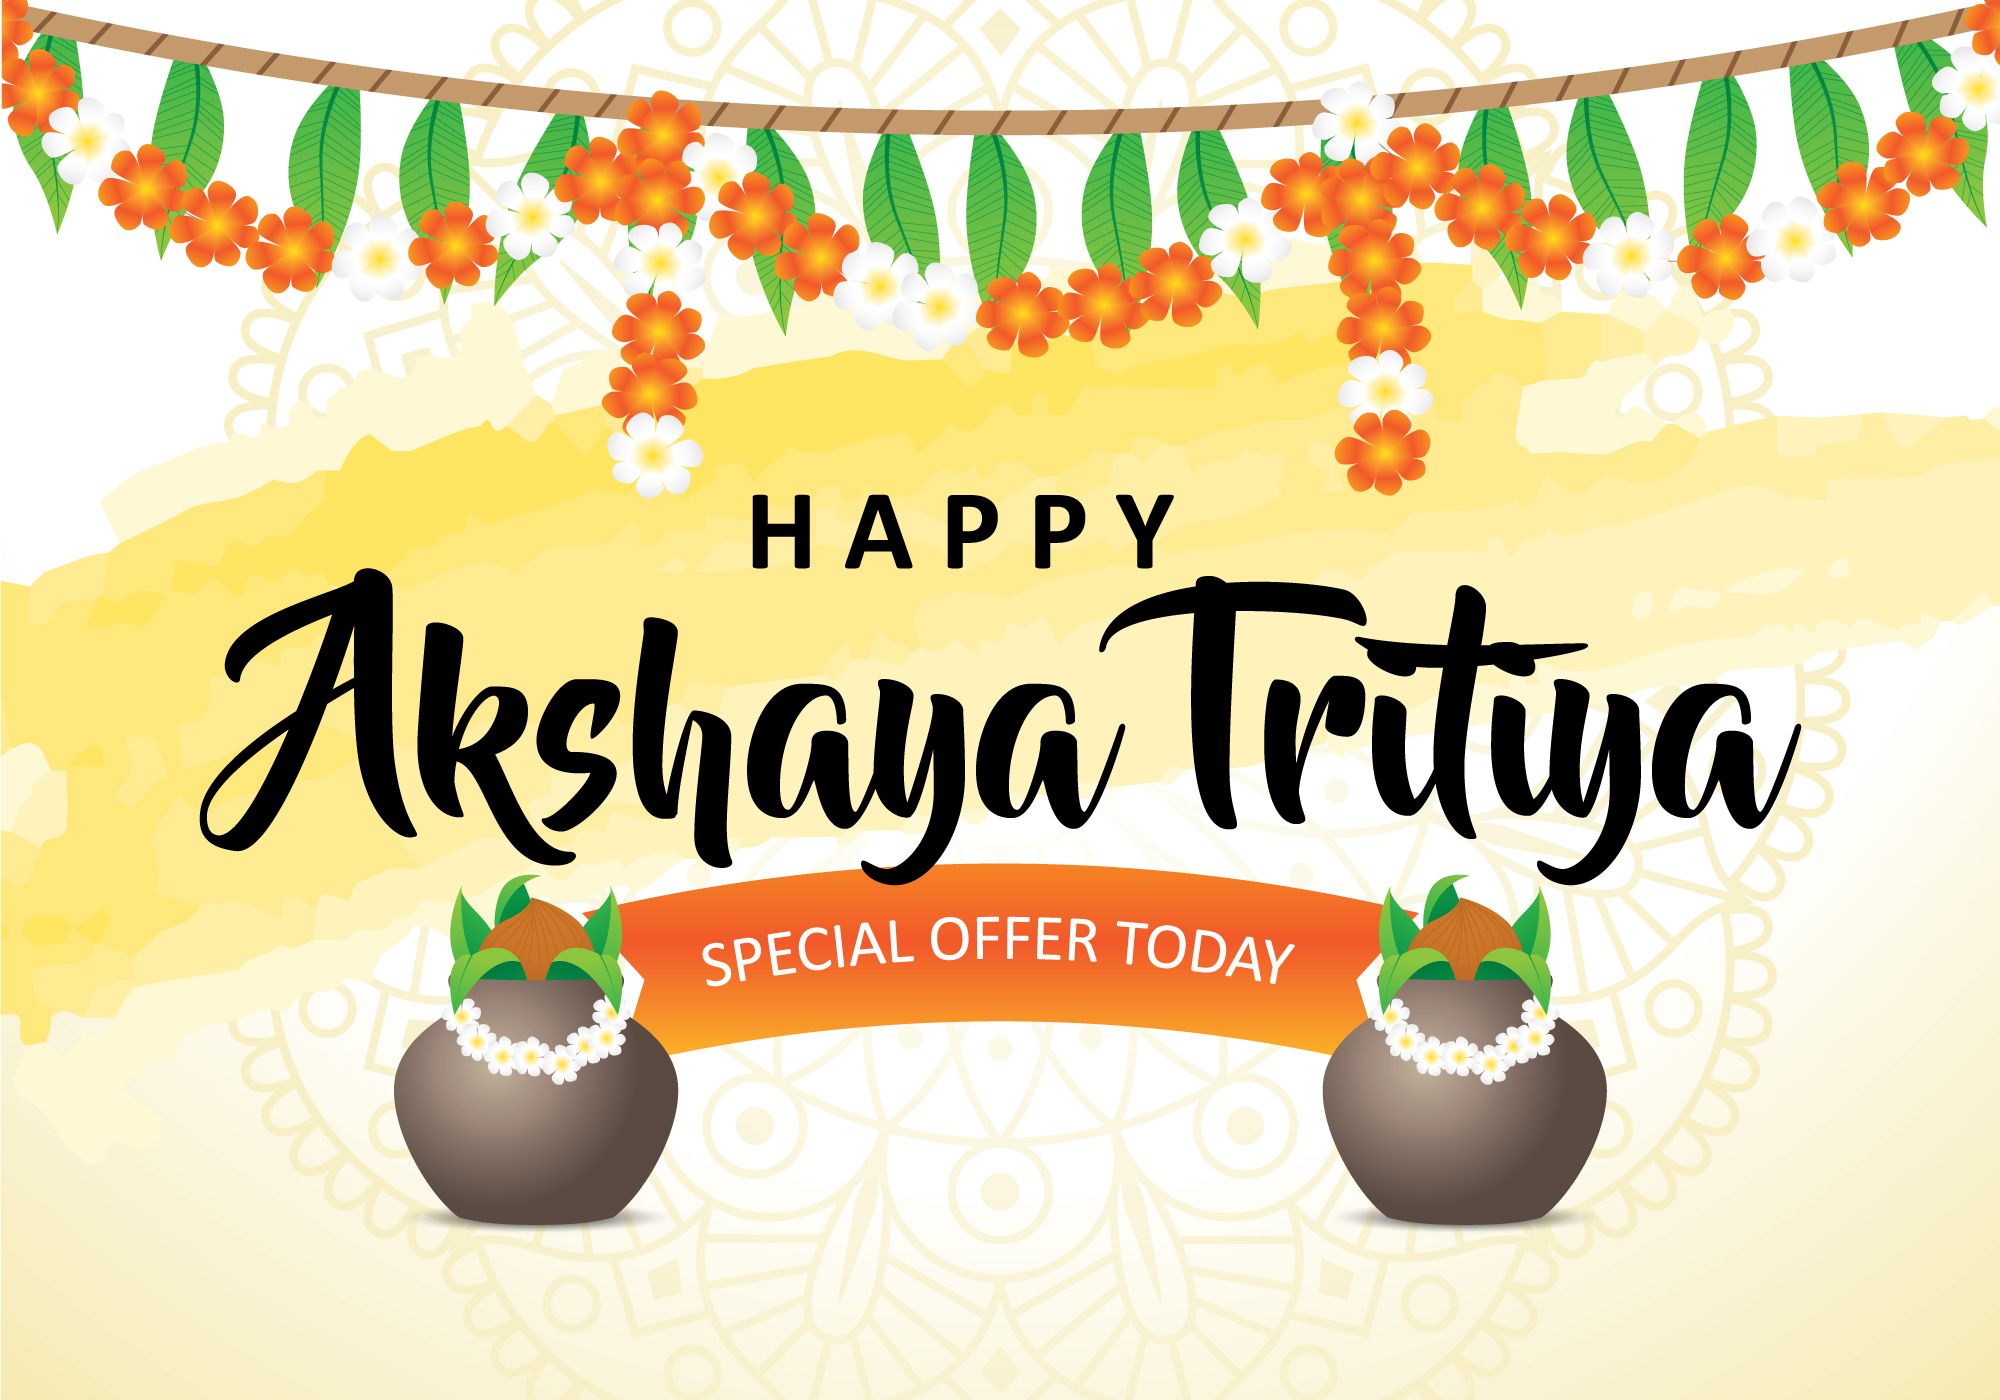 Happy Akshaya Tritiya Background Free Vectors, Clipart